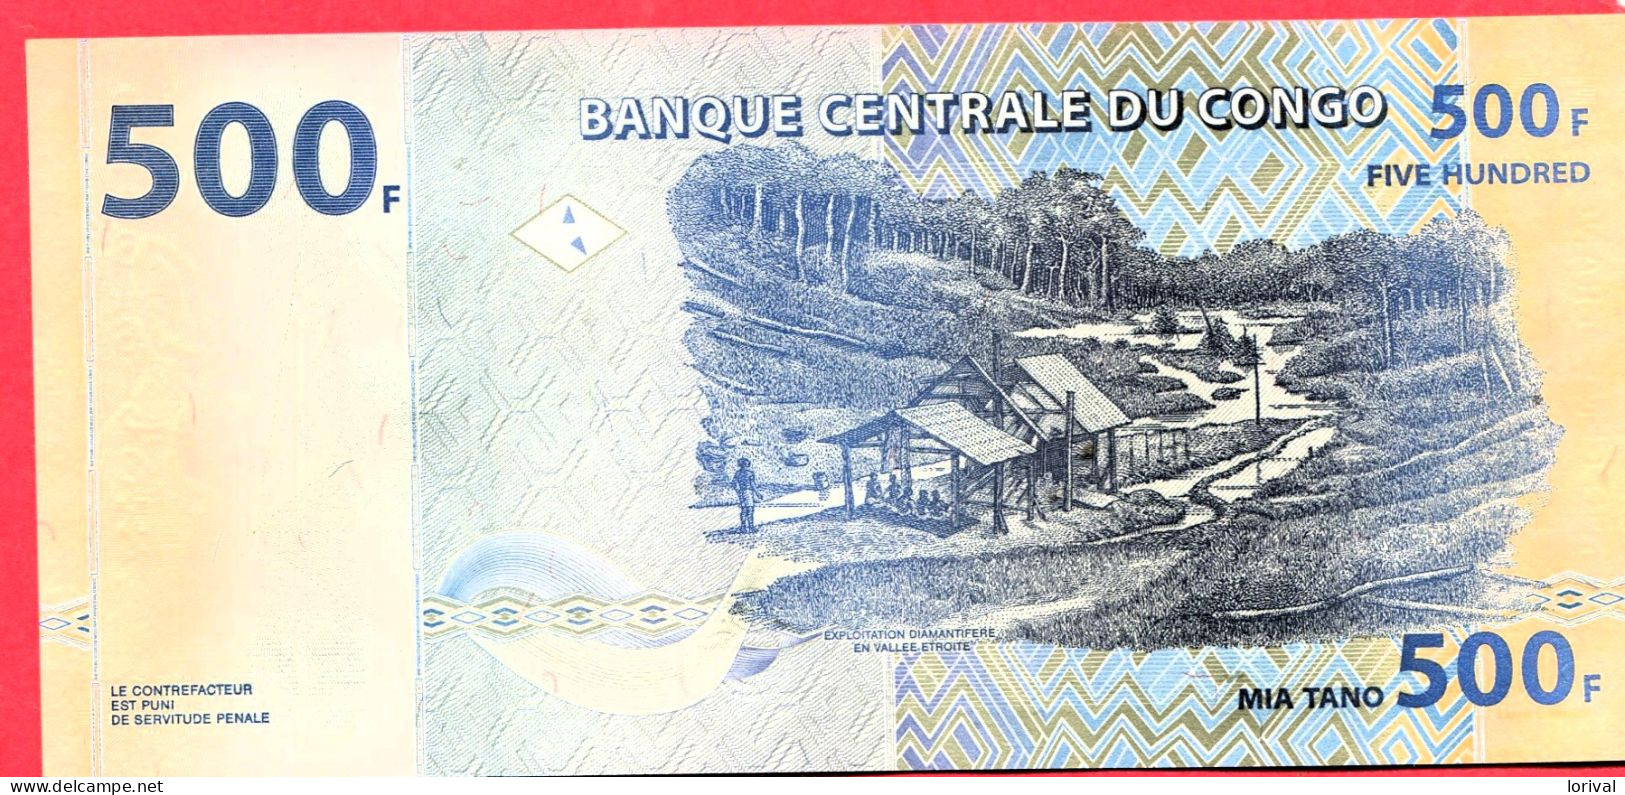 500 Francs Neuf 3 Euros - Republik Kongo (Kongo-Brazzaville)